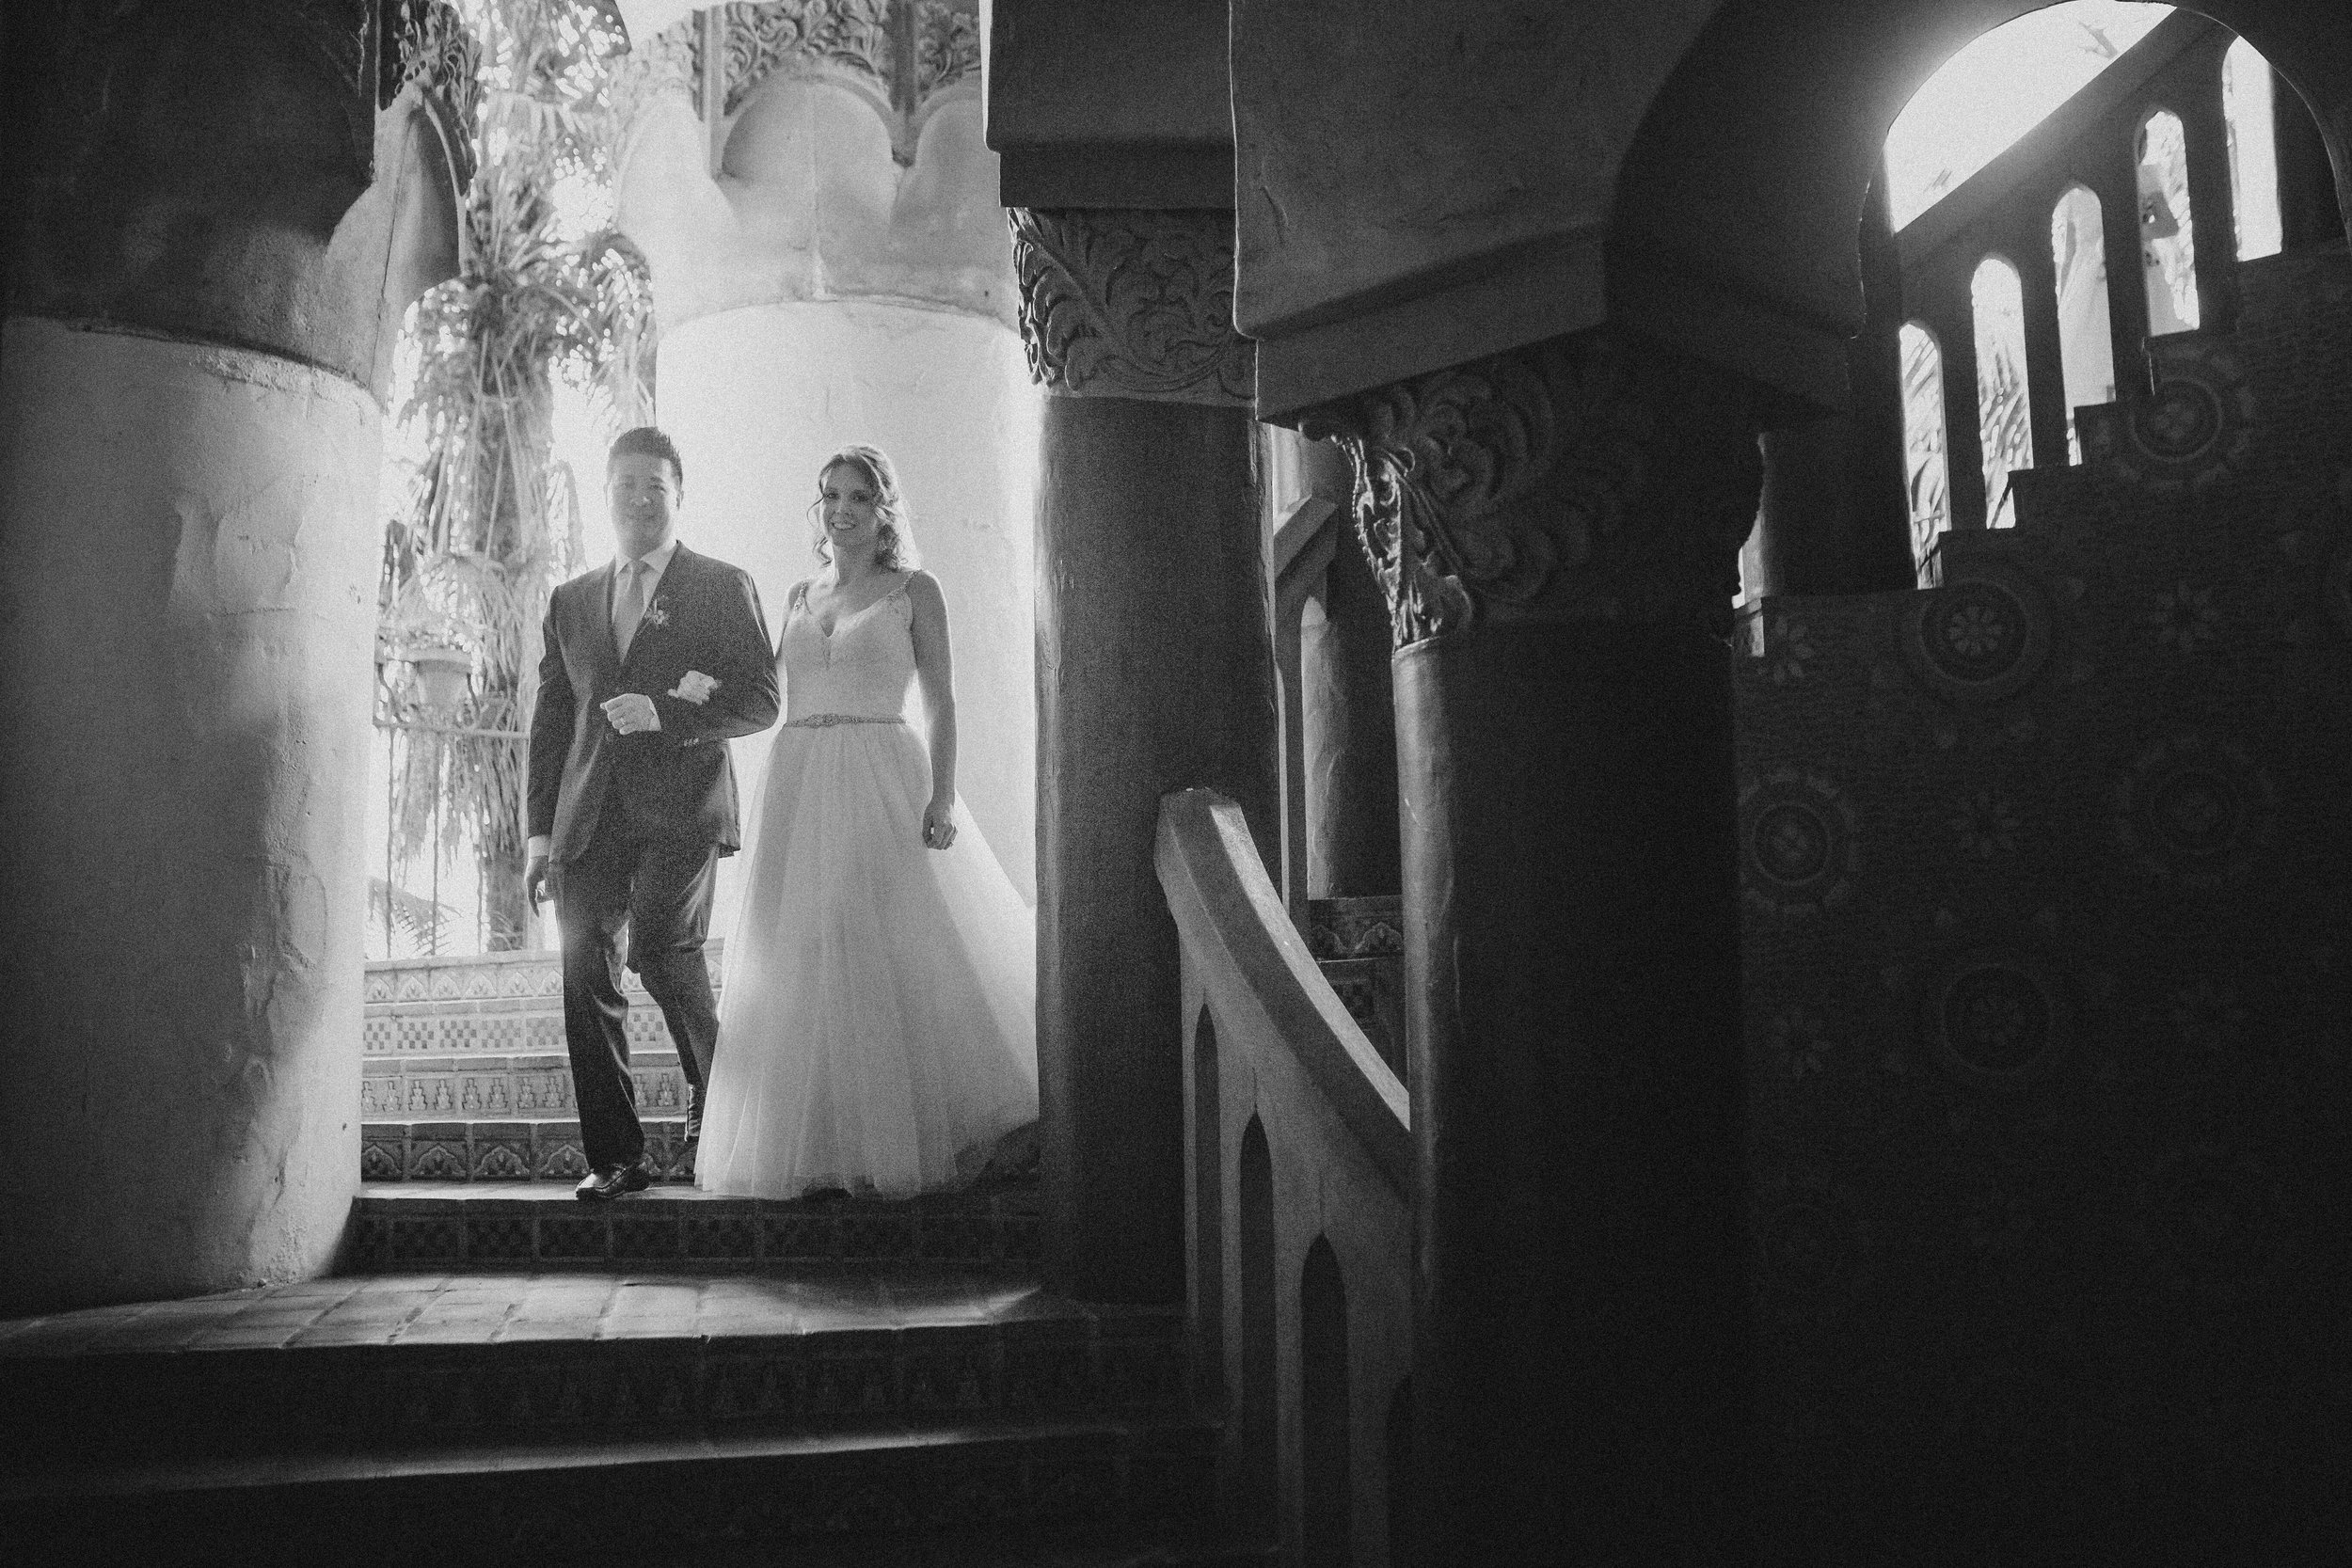 www.santabarbawedding.com | Venue: Santa Barbara Courthouse | Photography: Ryanne Bee Photography | Officiant: Santa Barbara Classic Weddings | Bride and Groom in Venue